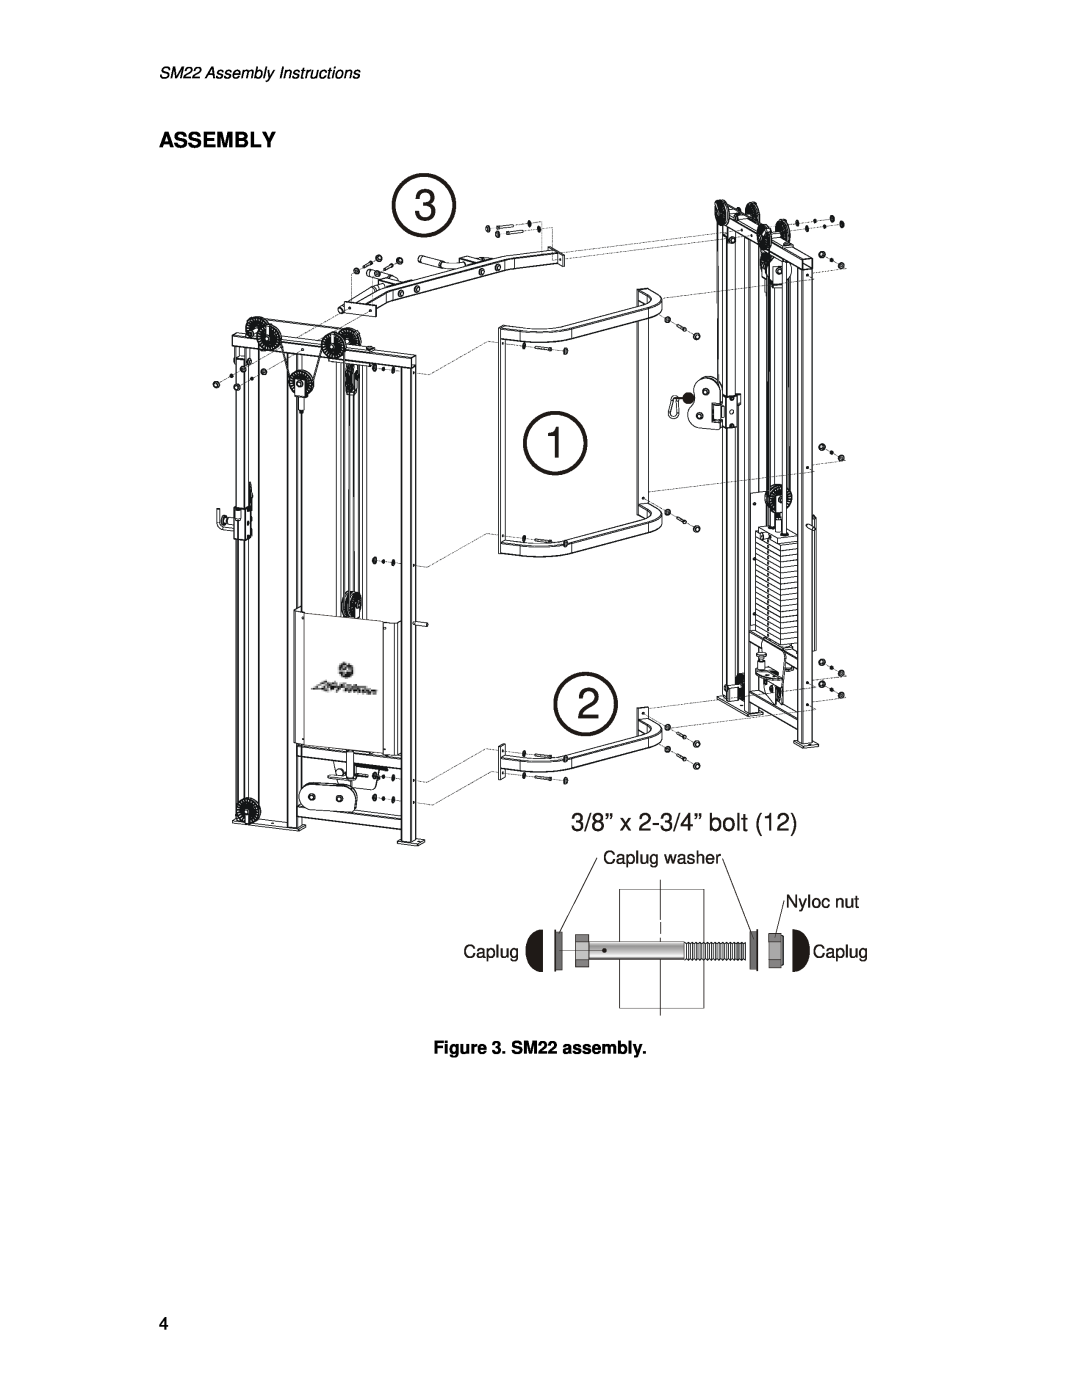 Life Fitness manual Assembly, SM22 assembly, 3/8” x 2-3/4” bolt, Caplug washer Nyloc nut Caplug 